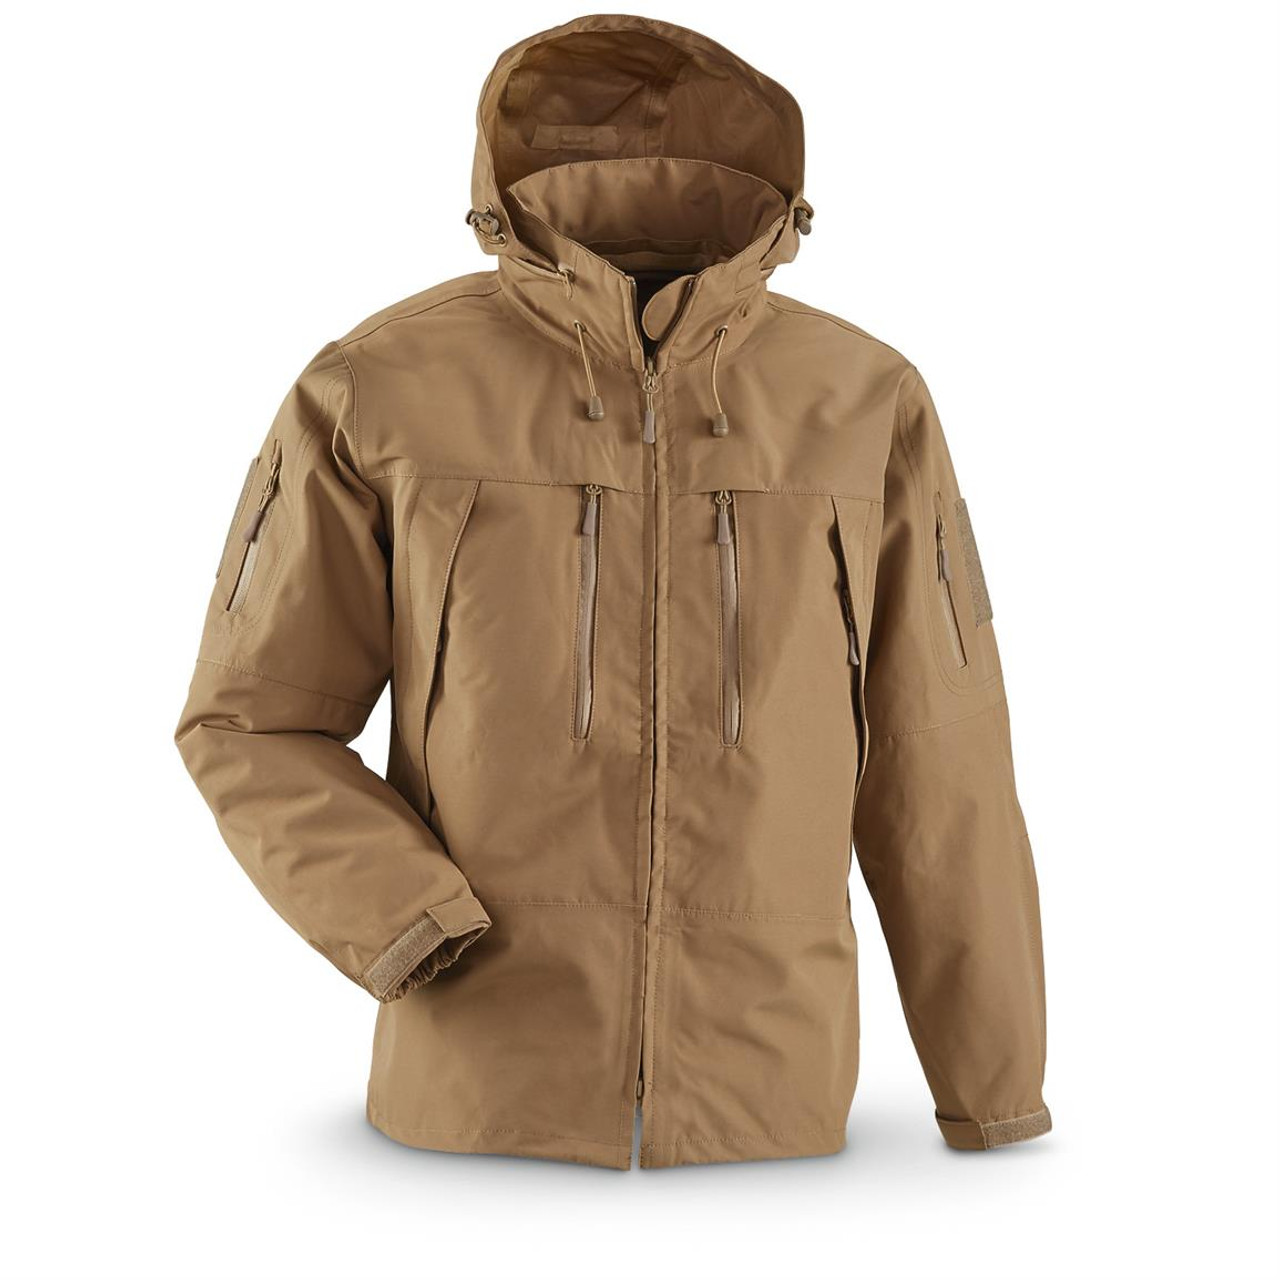 Mil-Tec Softshell Jacket - Mens, Flecktarn Camo, Small, 10864021-902 at   Men's Clothing store